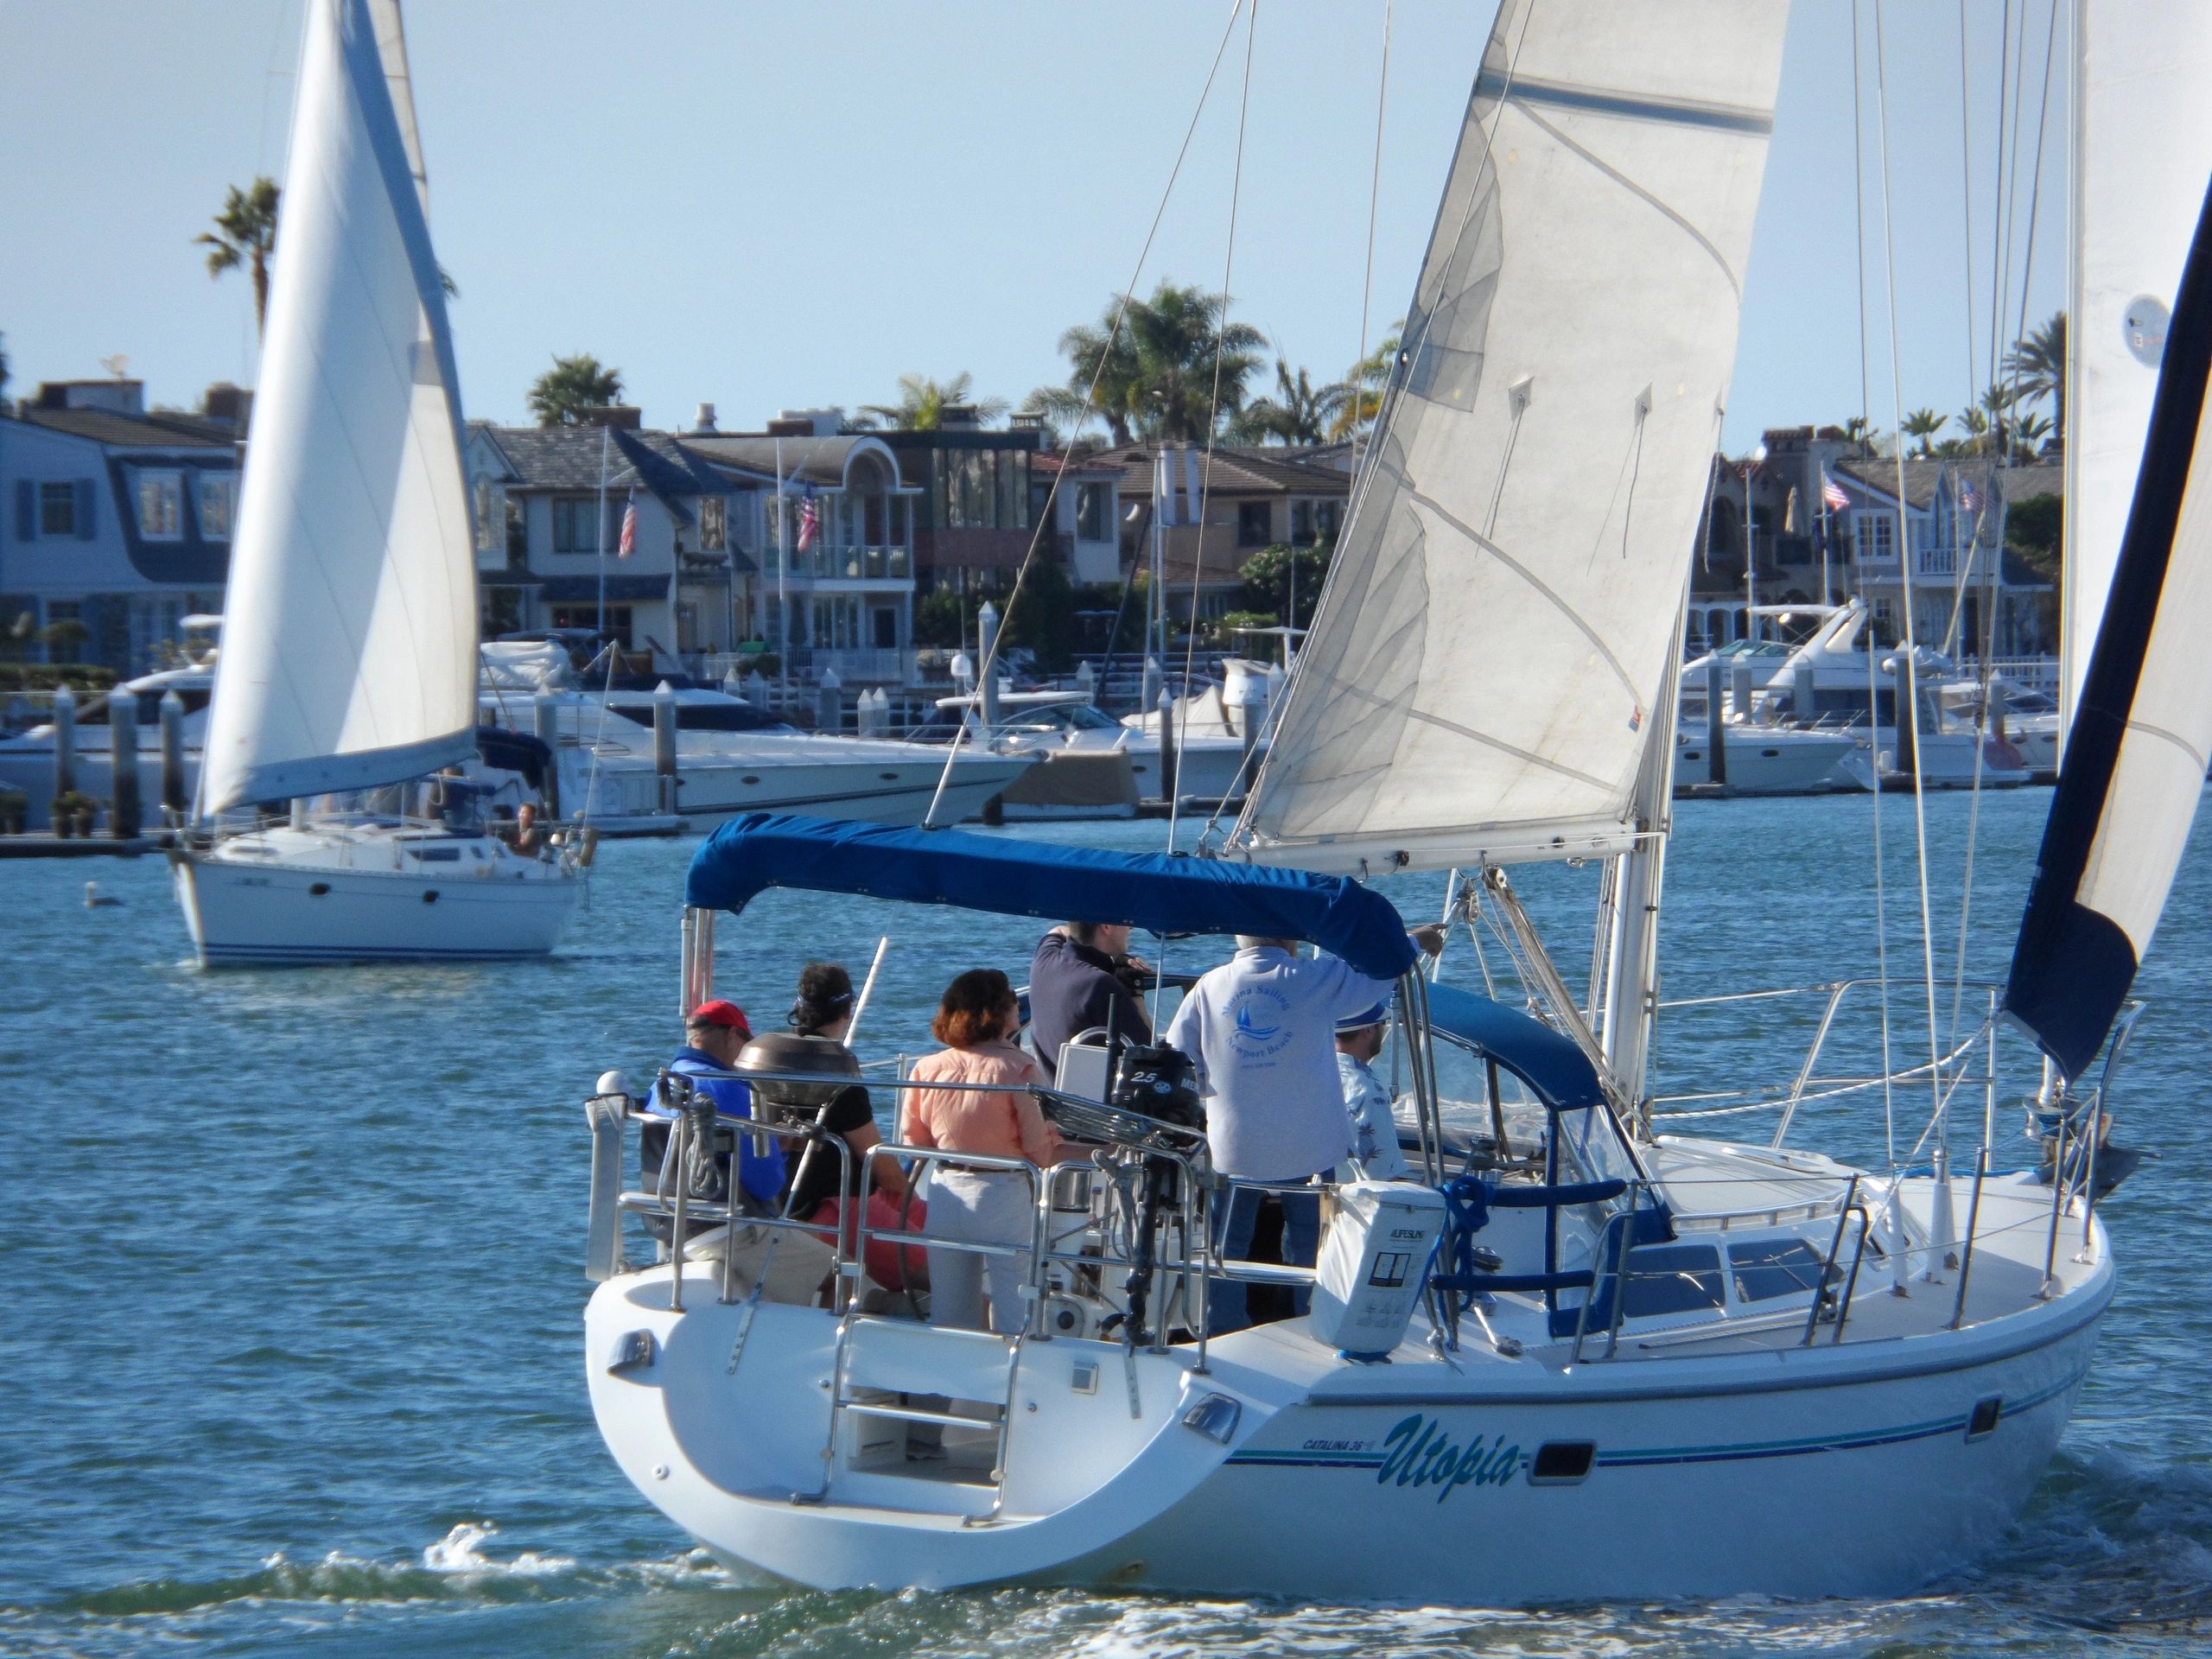 Waypoint Sailing team building sail in Newport Beach, CA.